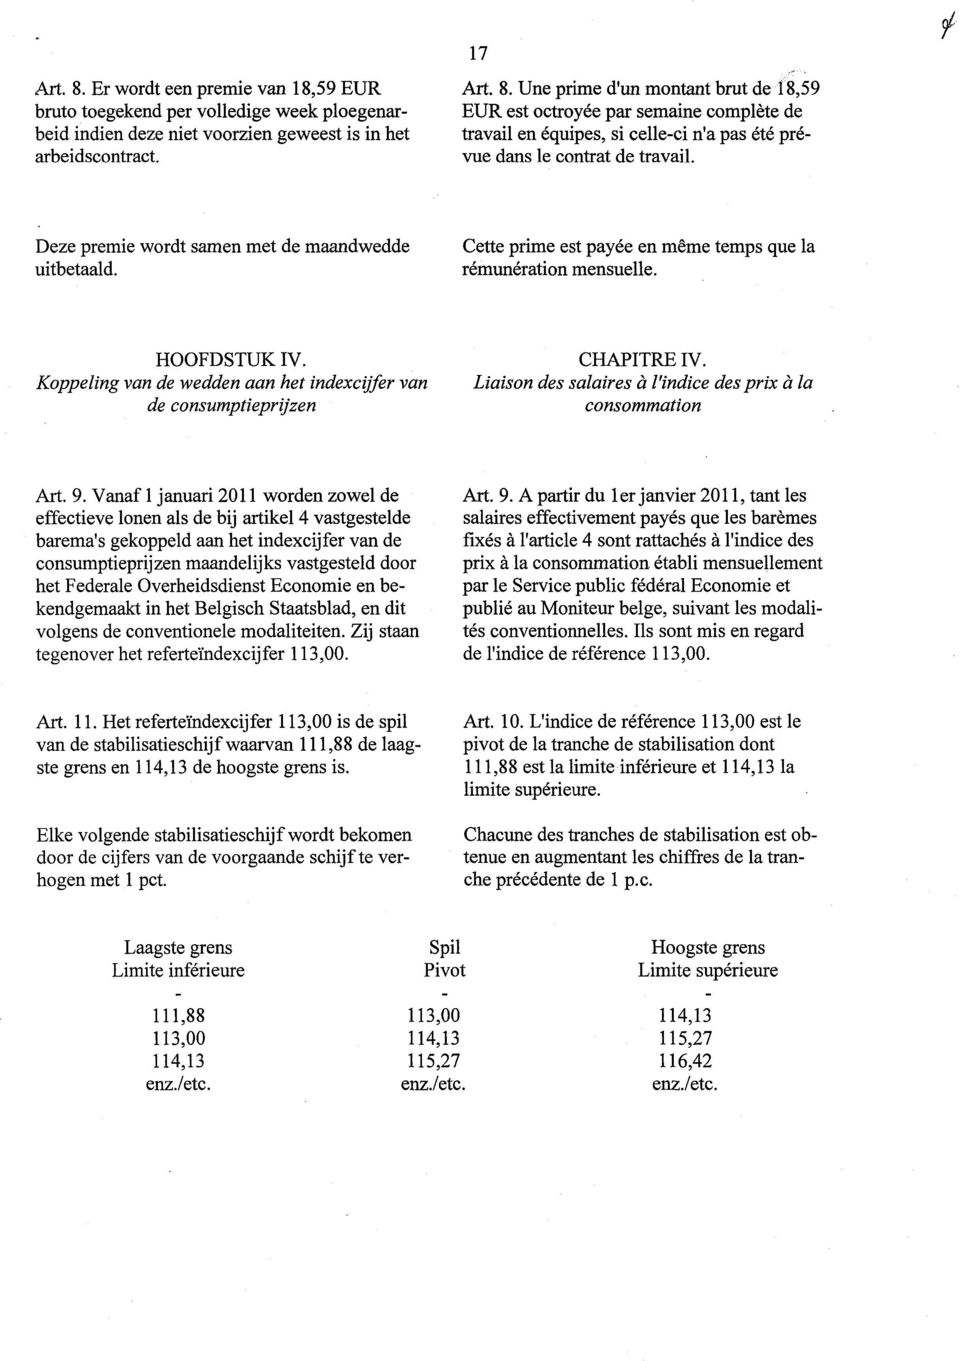 Koppeling van de wedden aan het indexcijfer van de consumptieprijzen CHAPITRE IV. Liaison des salaires à l'indice des prix à la consommation Art. 9.